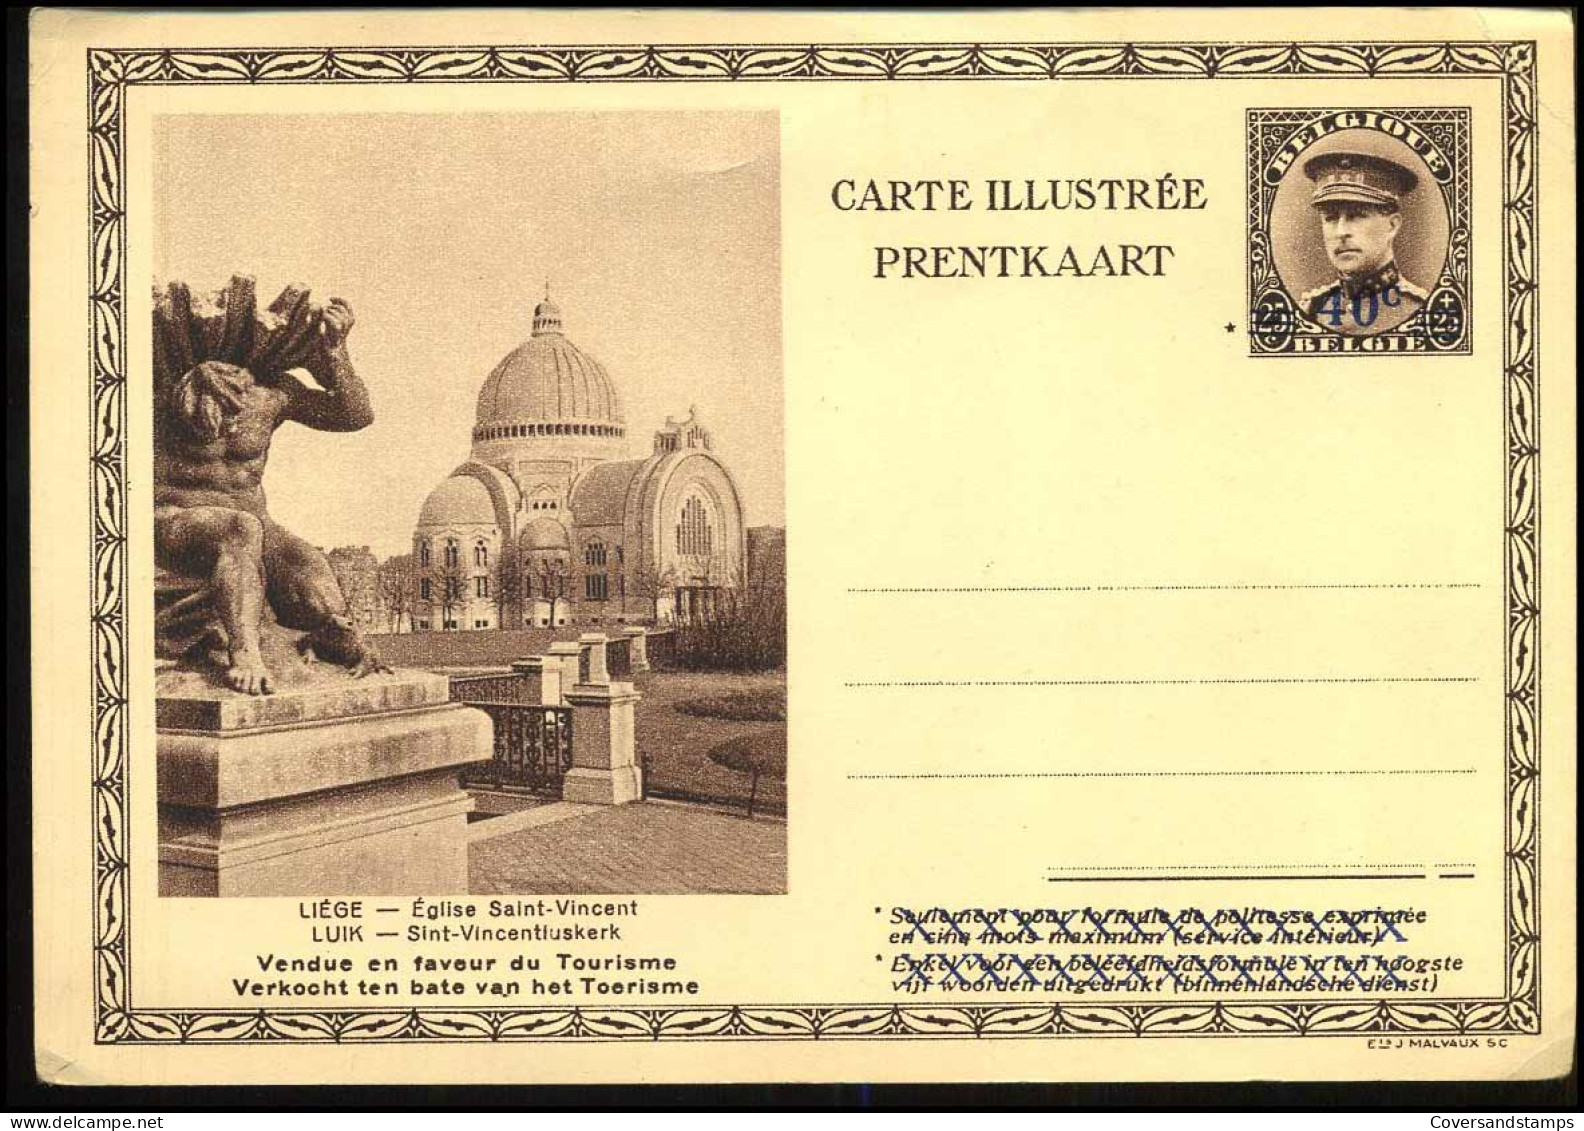 Prentkaart / Carte Illustrée - Liège, Eglise Saint-Vincent / Luik, Sint-Vincentiuskerk -- Opdruk 40c - Cartoline Illustrate (1971-2014) [BK]